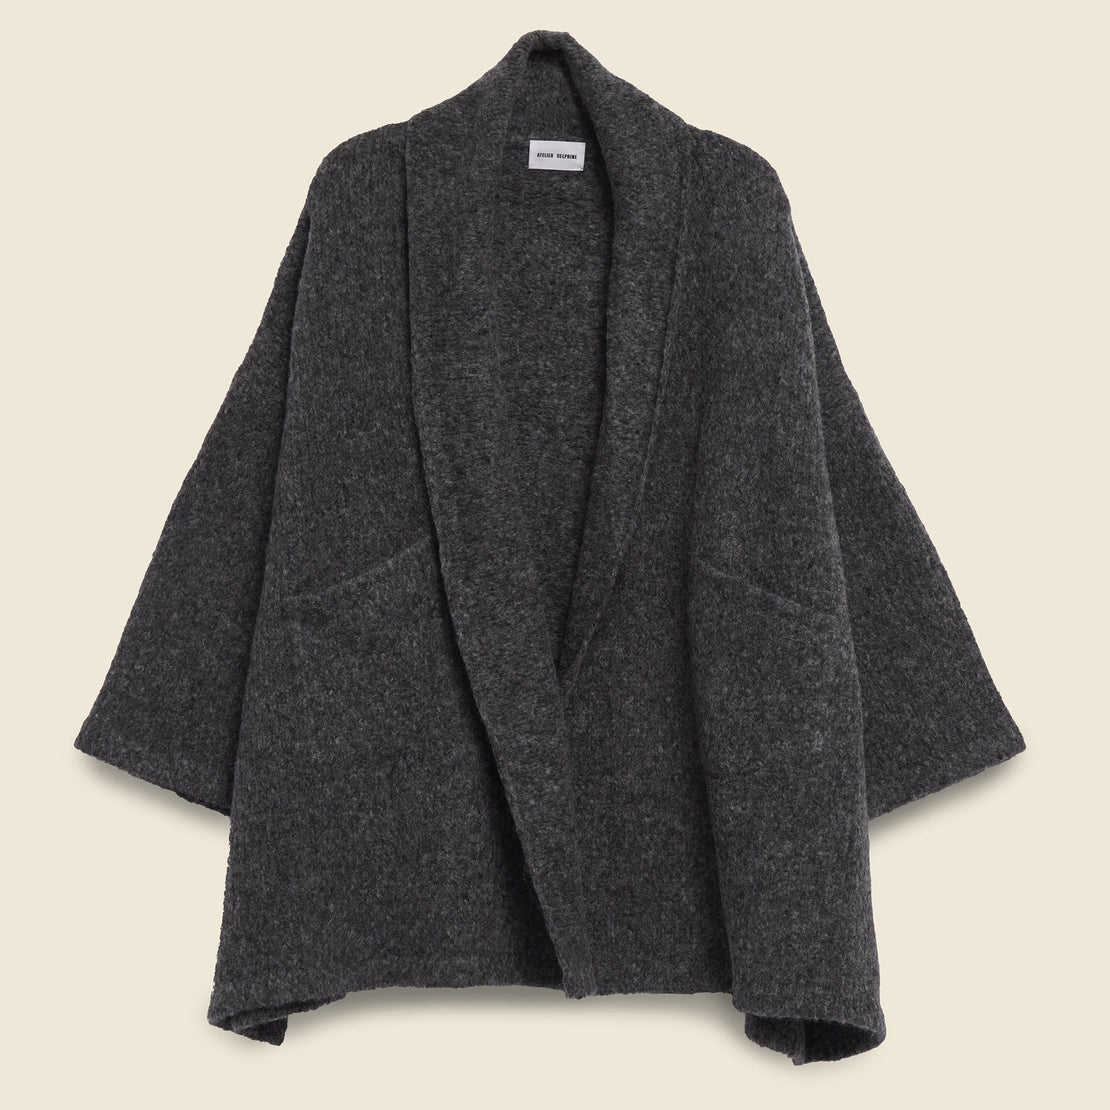 Atelier Delphine Haori Sweater Coat - Charcoal